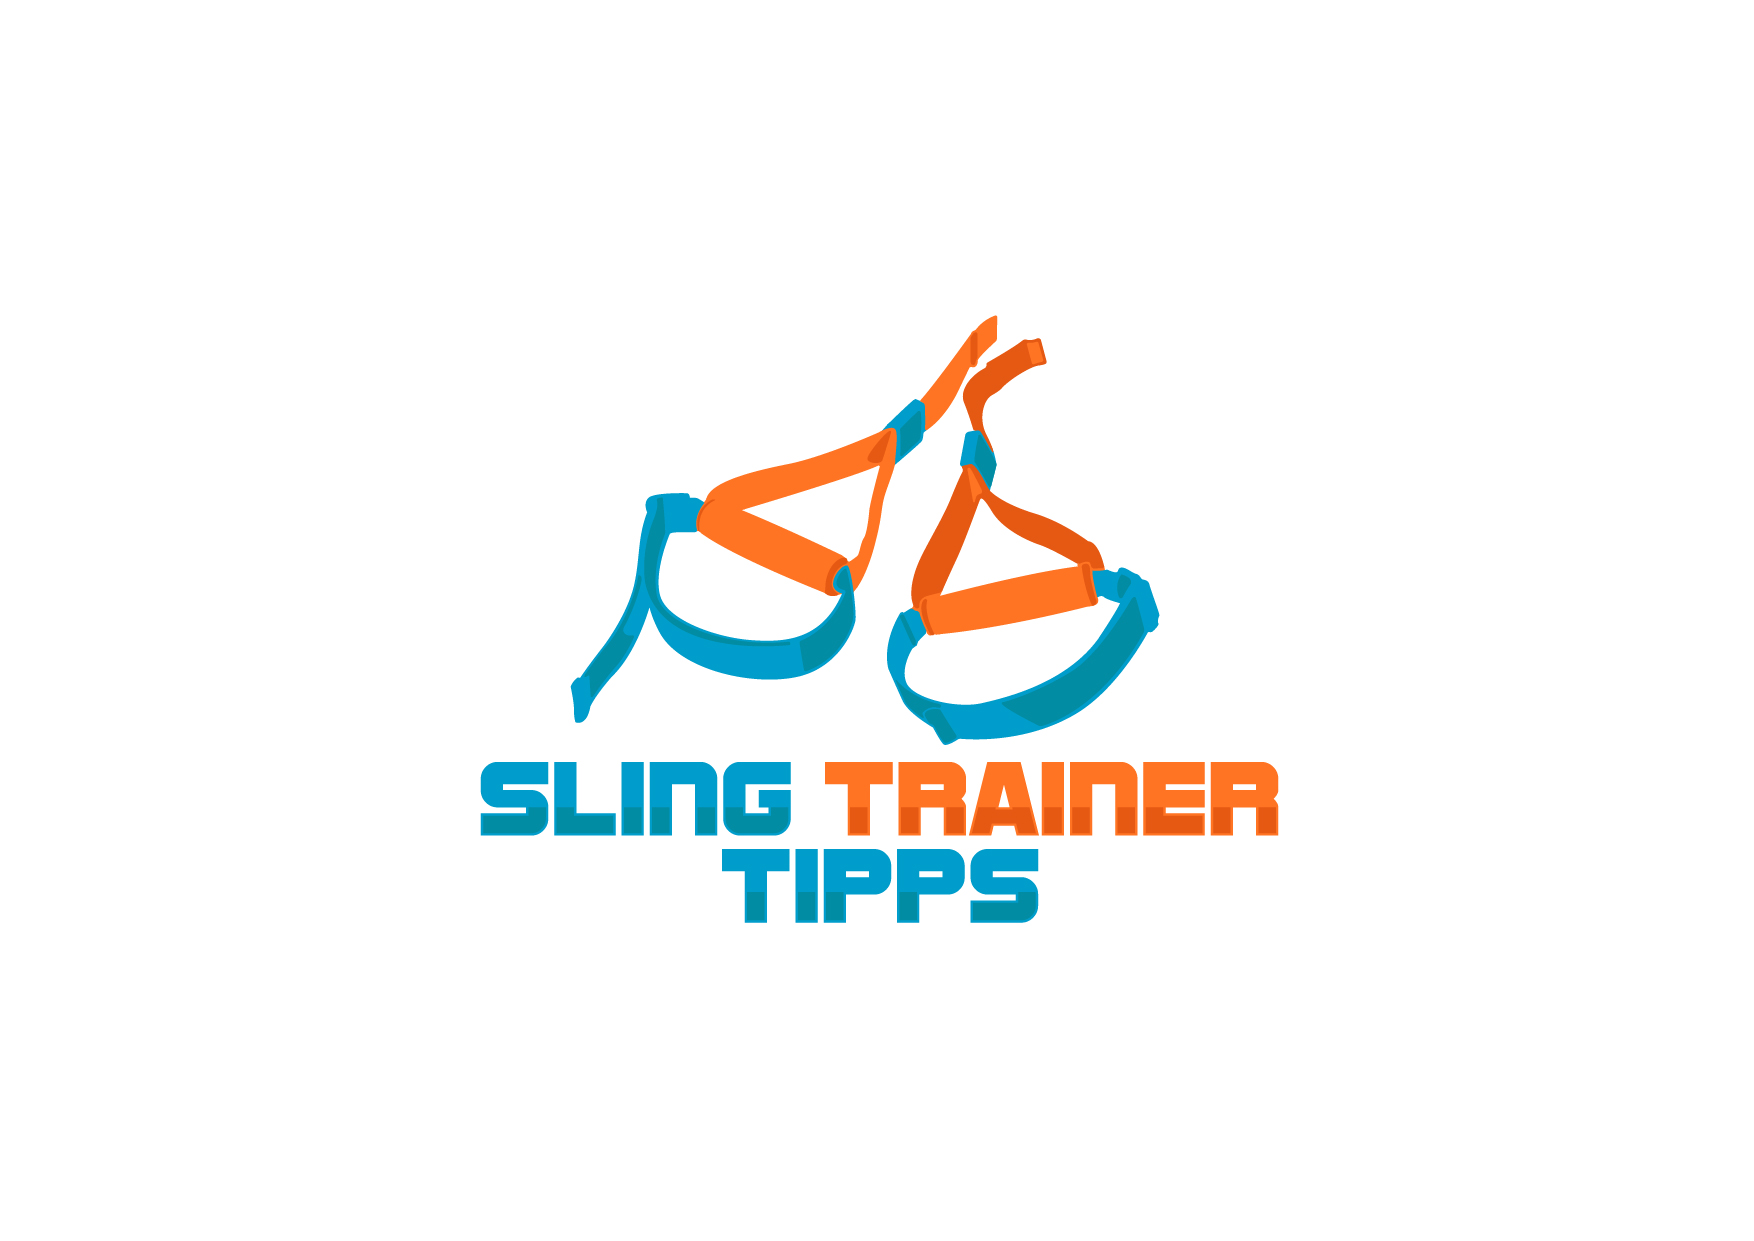 Sling Trainer Tipps